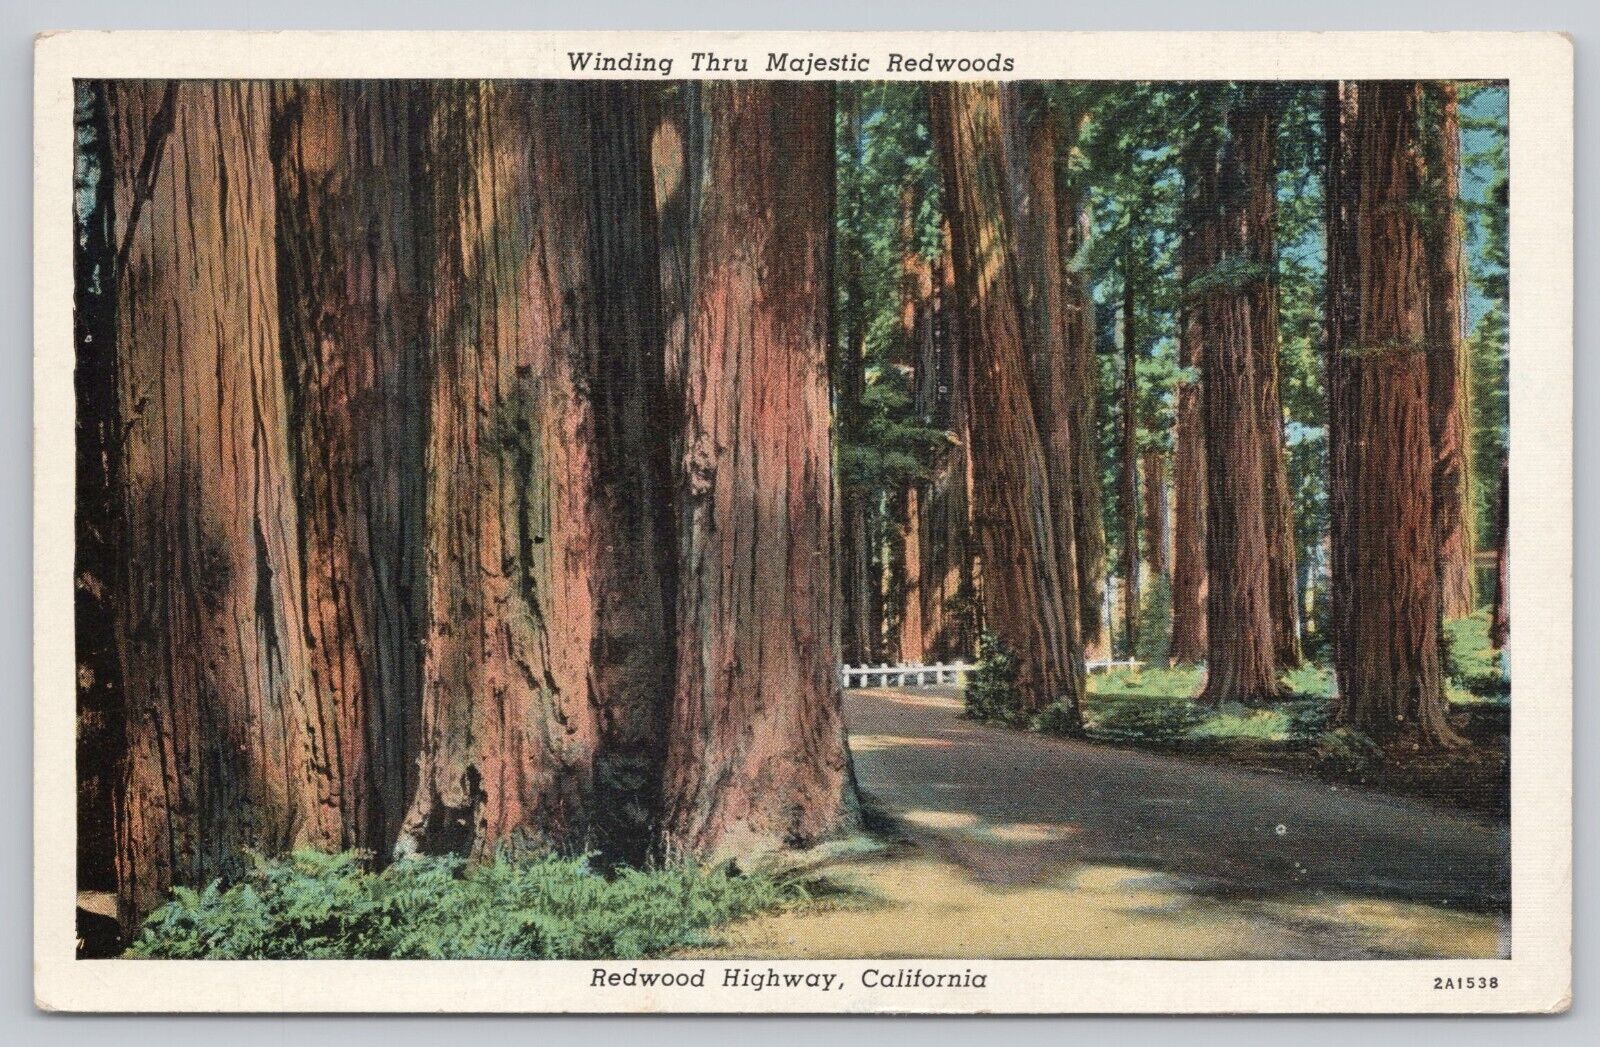 Redwood Highway California, Winding thru Majestic Redwoods, Vintage Postcard